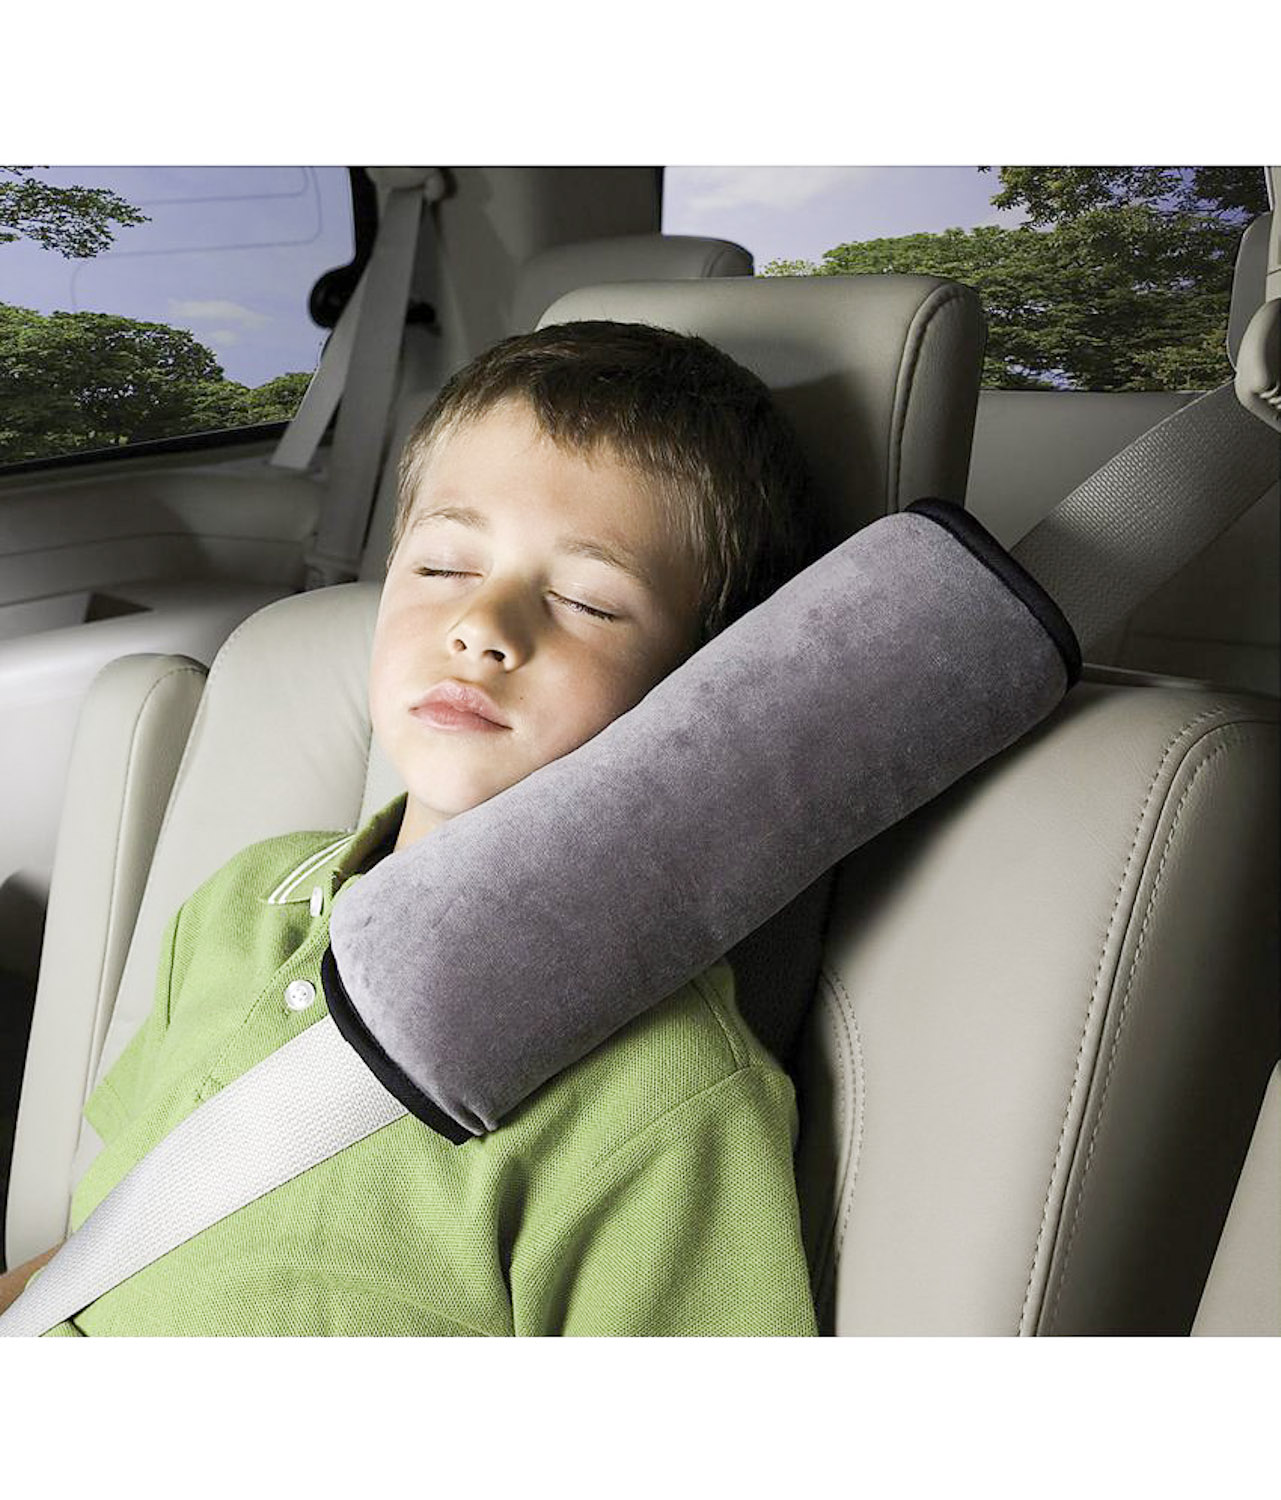 Protezione per cintura di sicurezza per auto, cuscino per cintura